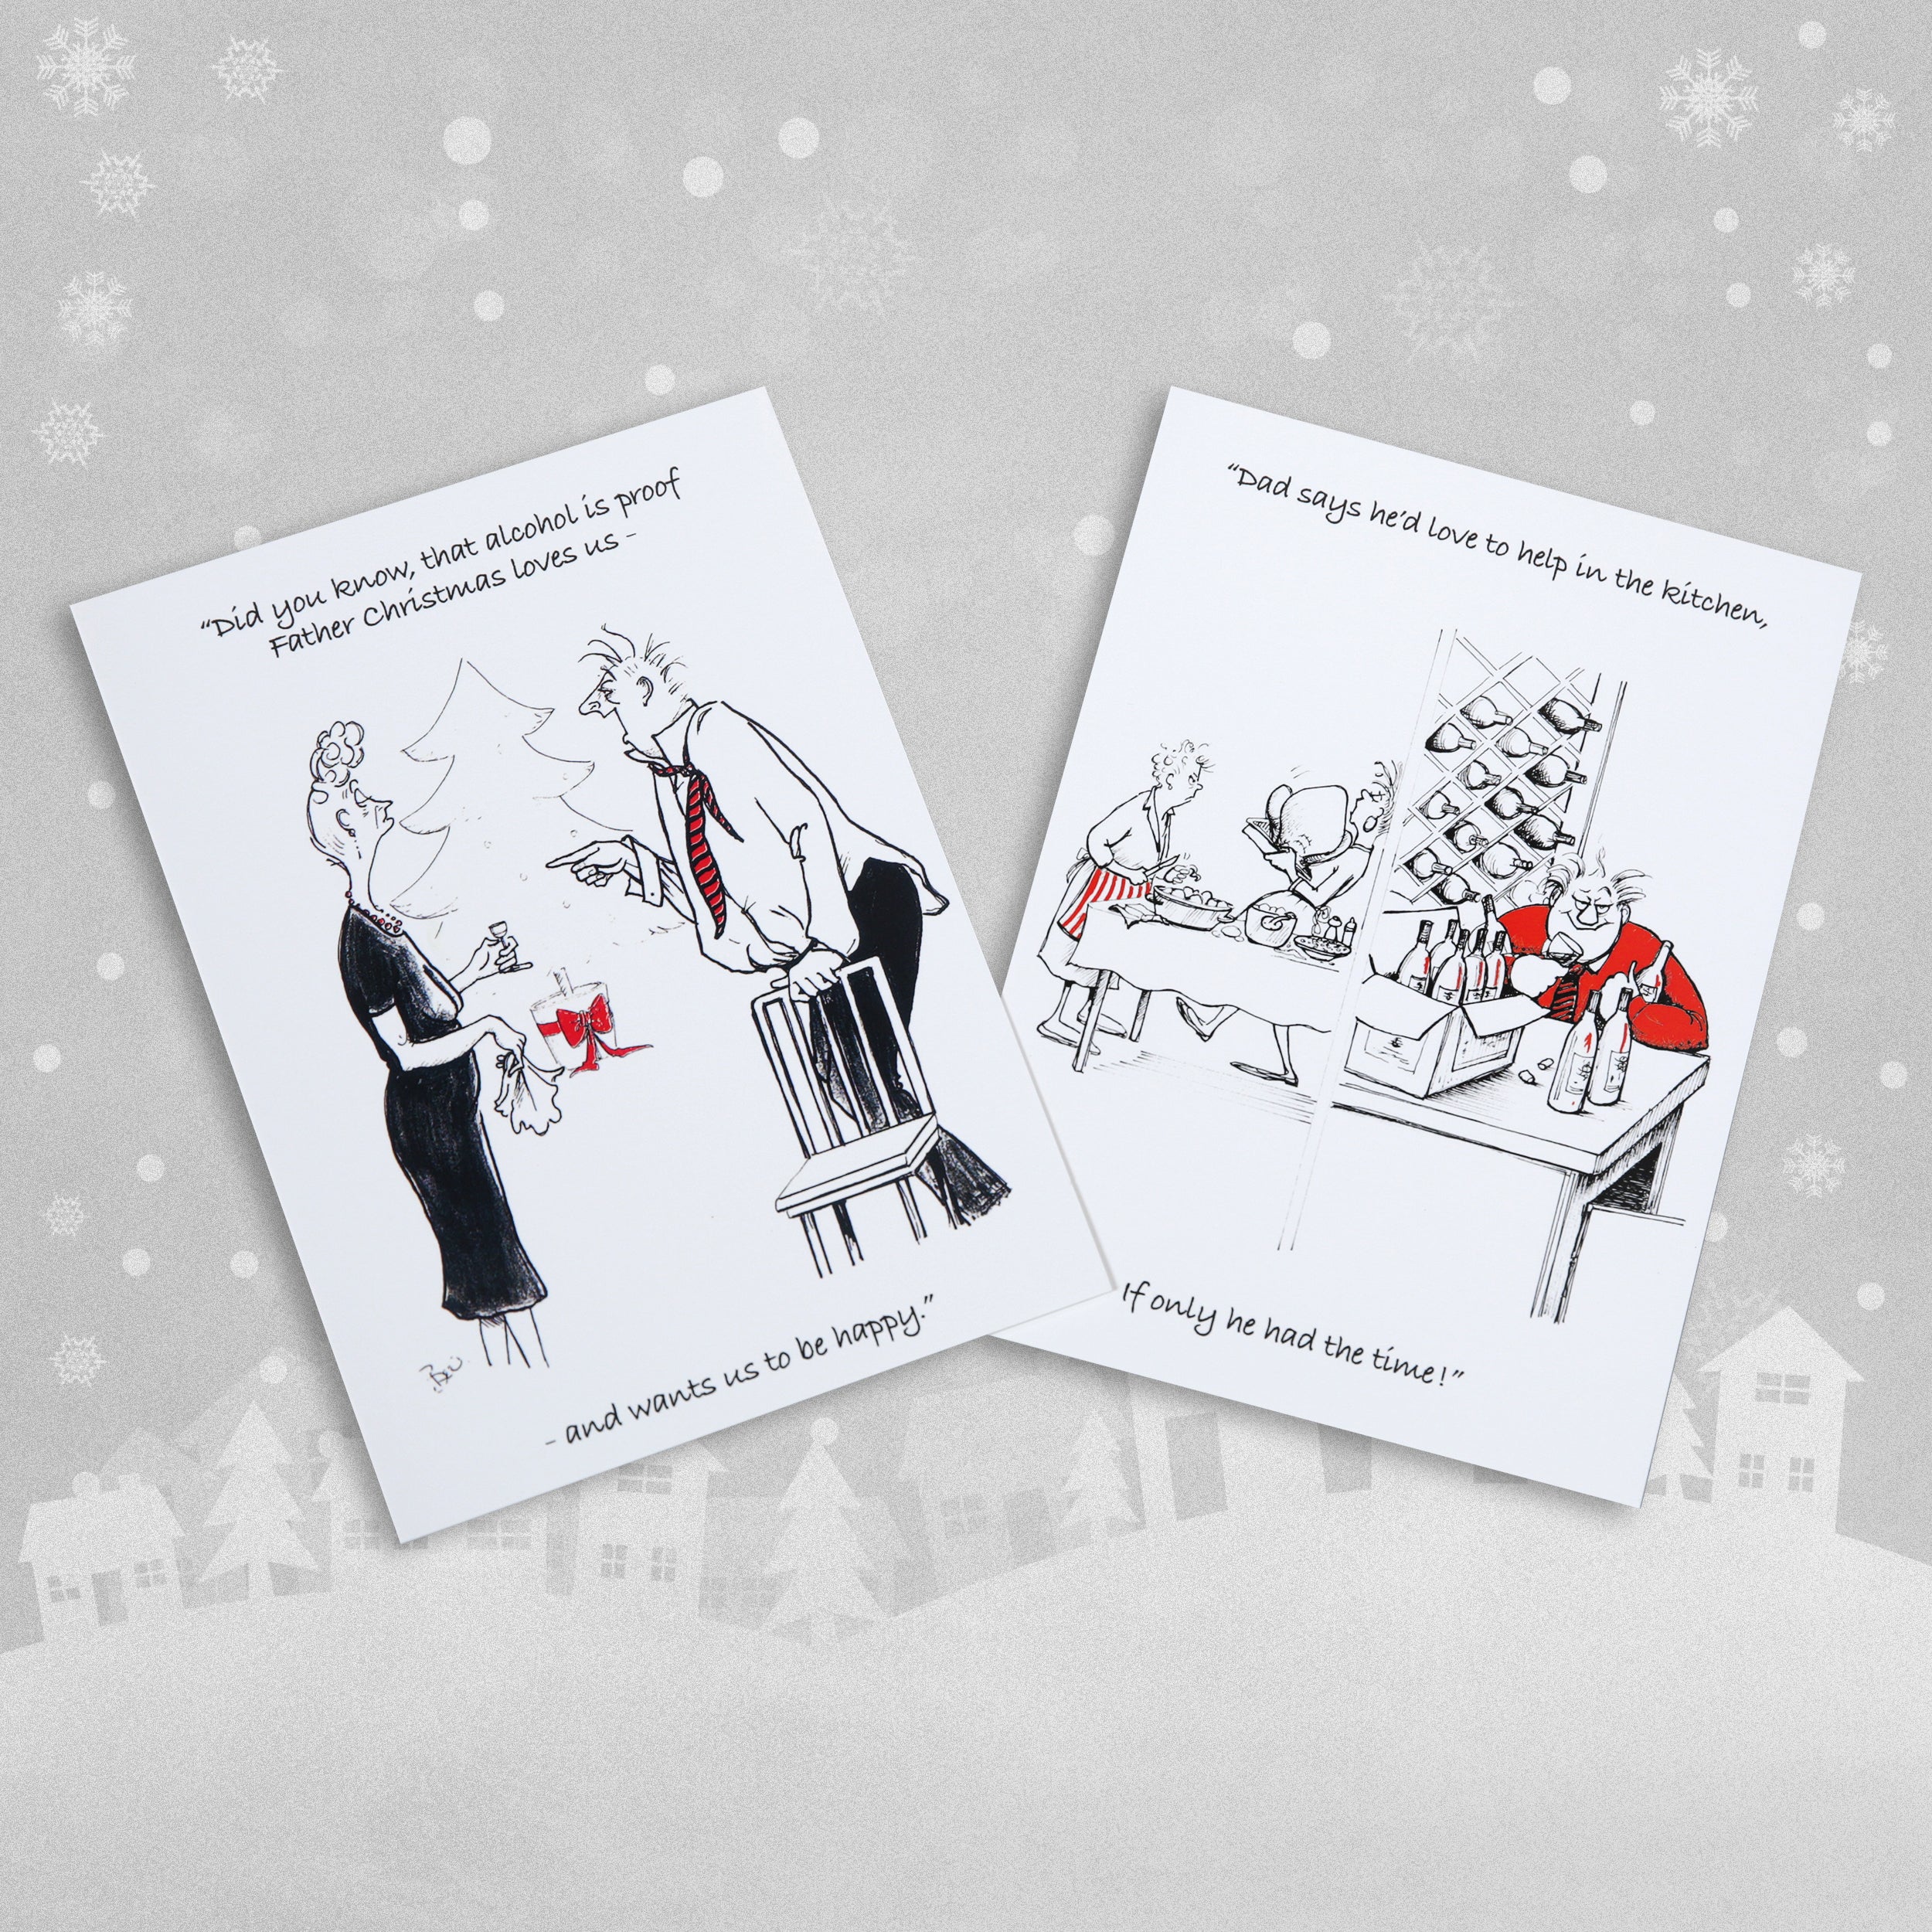 10 Humorous Christmas Cards - 'Alcohol'